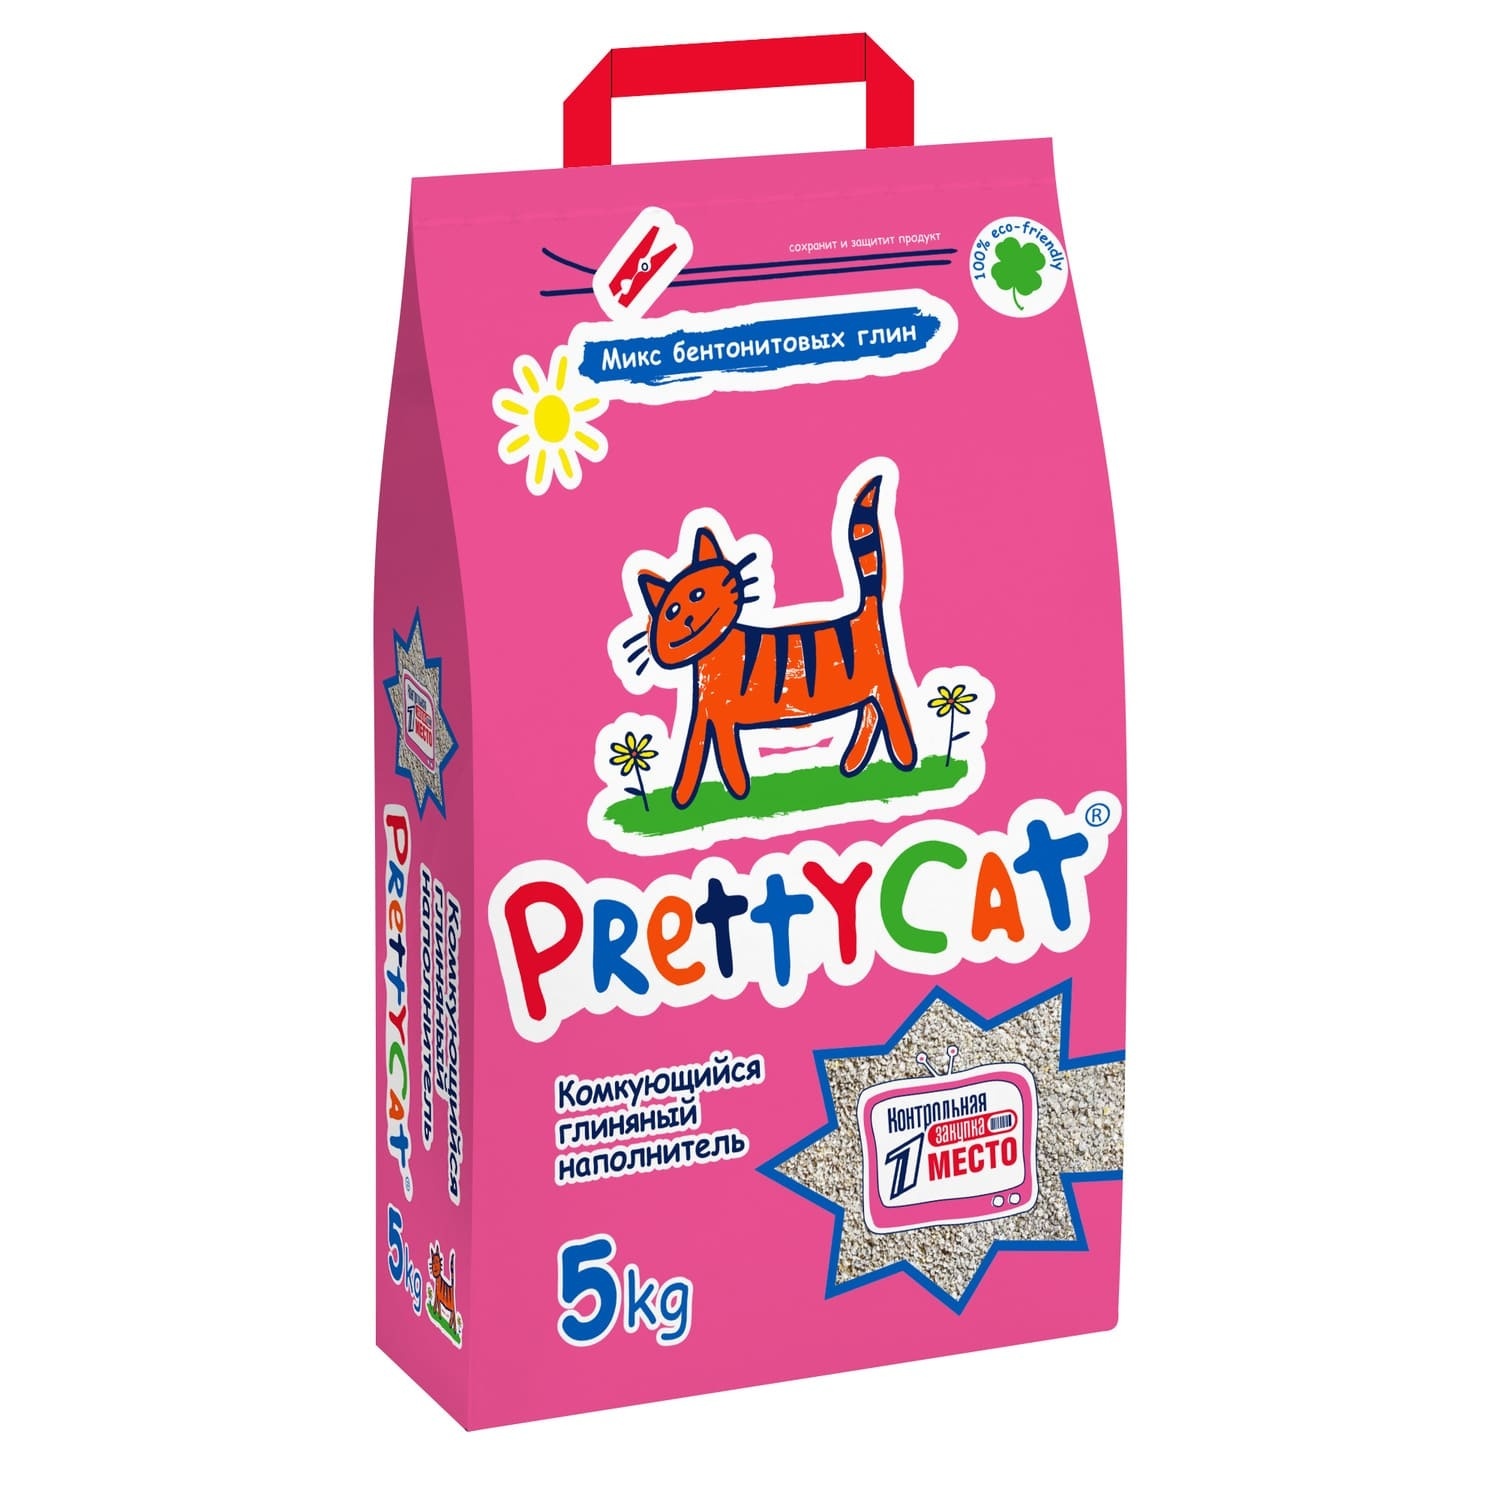 PrettyCat PrettyCat комкующийся наполнитель (20 кг) наполнитель для кошачьего туалета prettycat euro mix бентонитовый комкующийся 20кг